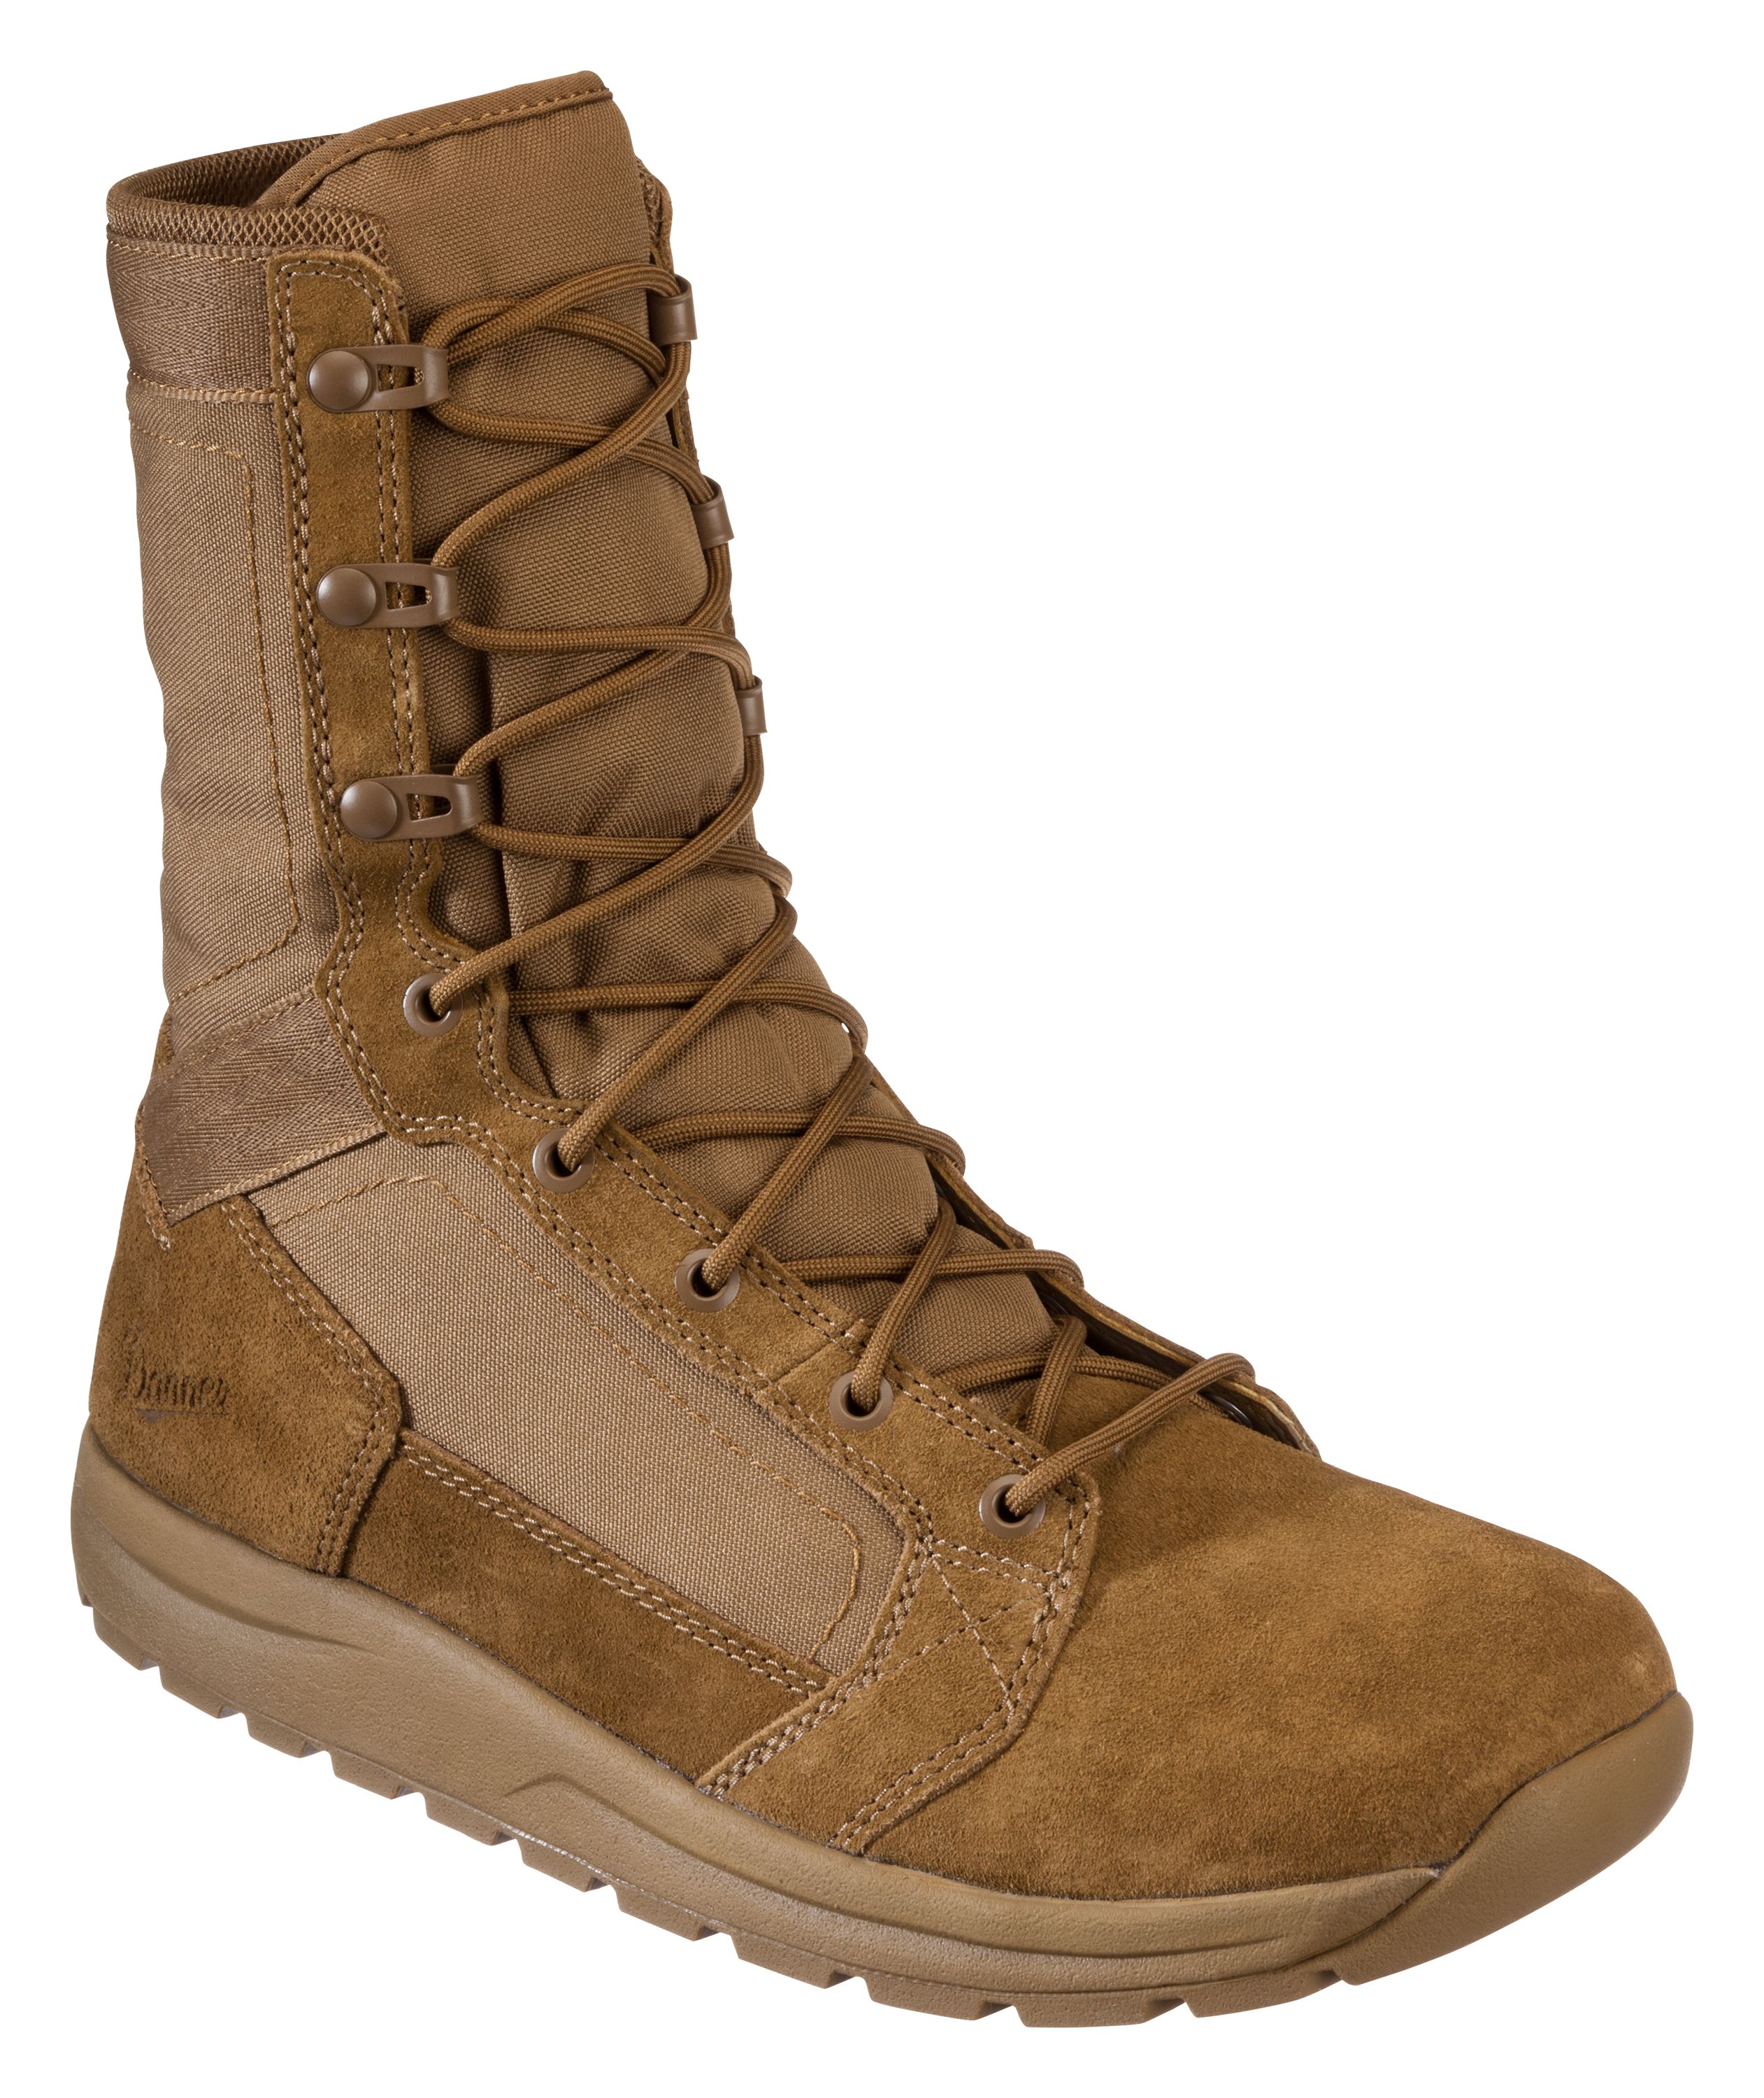 Danner Tachyon Tactical Boots for Men - Coyote - 16W